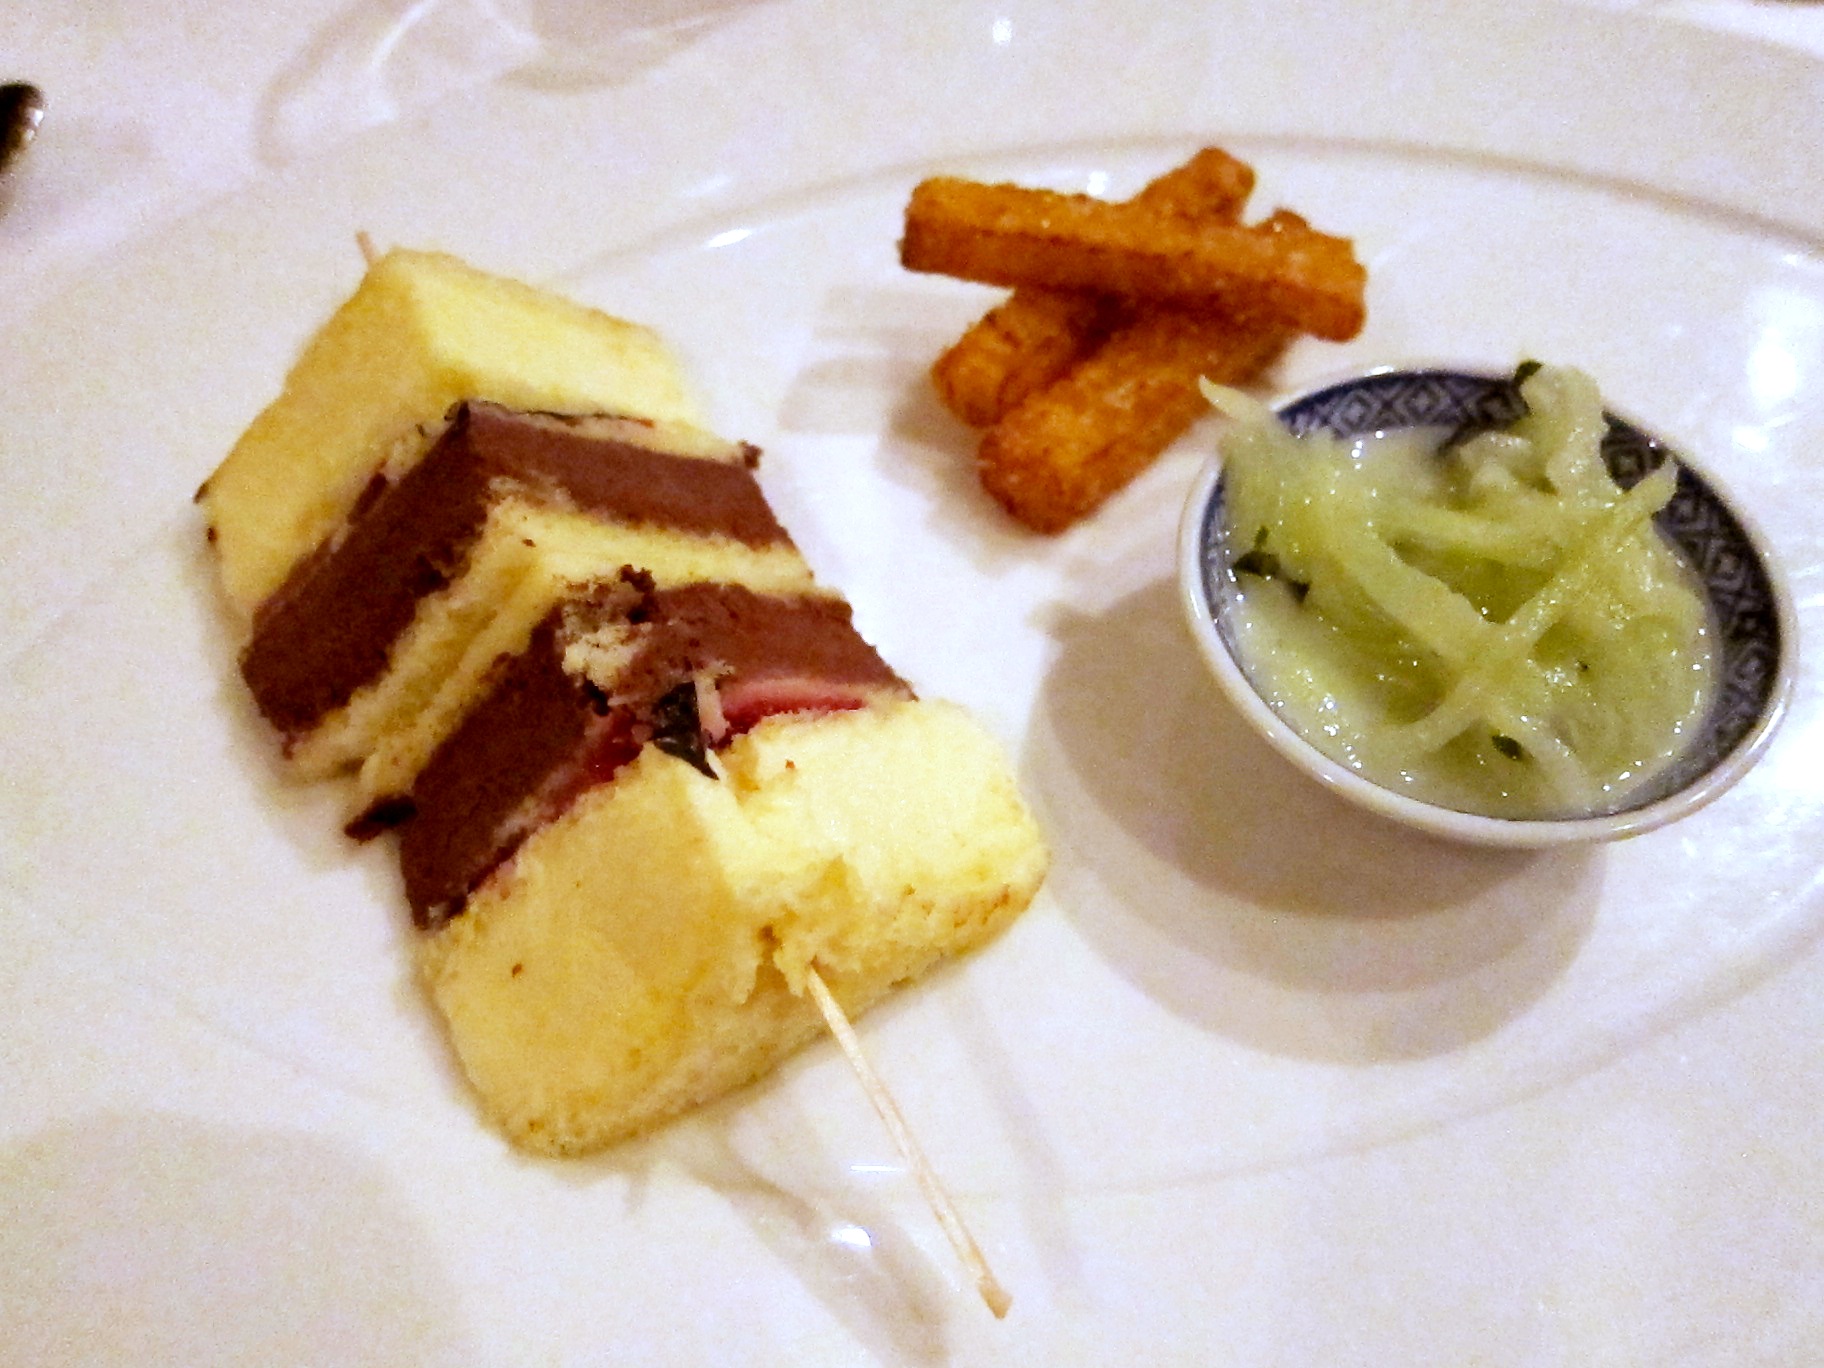 Dessert: Chocolate Club Sandwich, Pineapple Fries, and Creamy Melon Salad with Fresh Mint